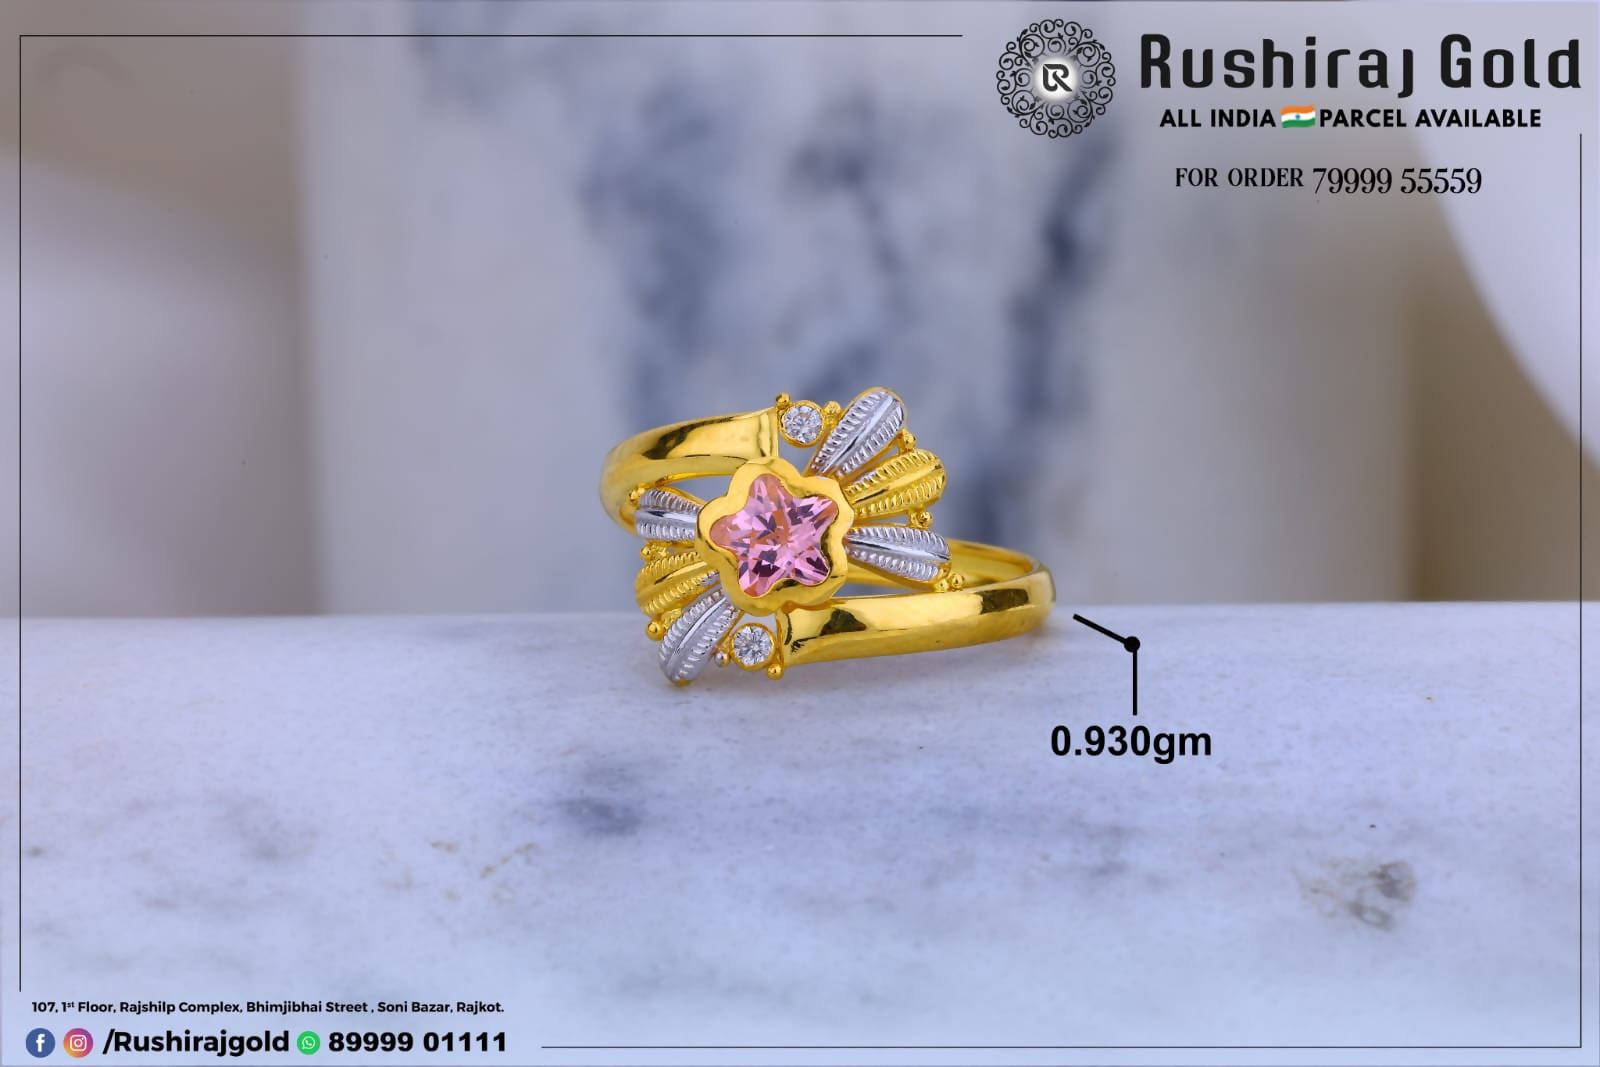 Khudop macha amtang😁❤️#ad_jewellery#ring_design#manipuri#gold - YouTube